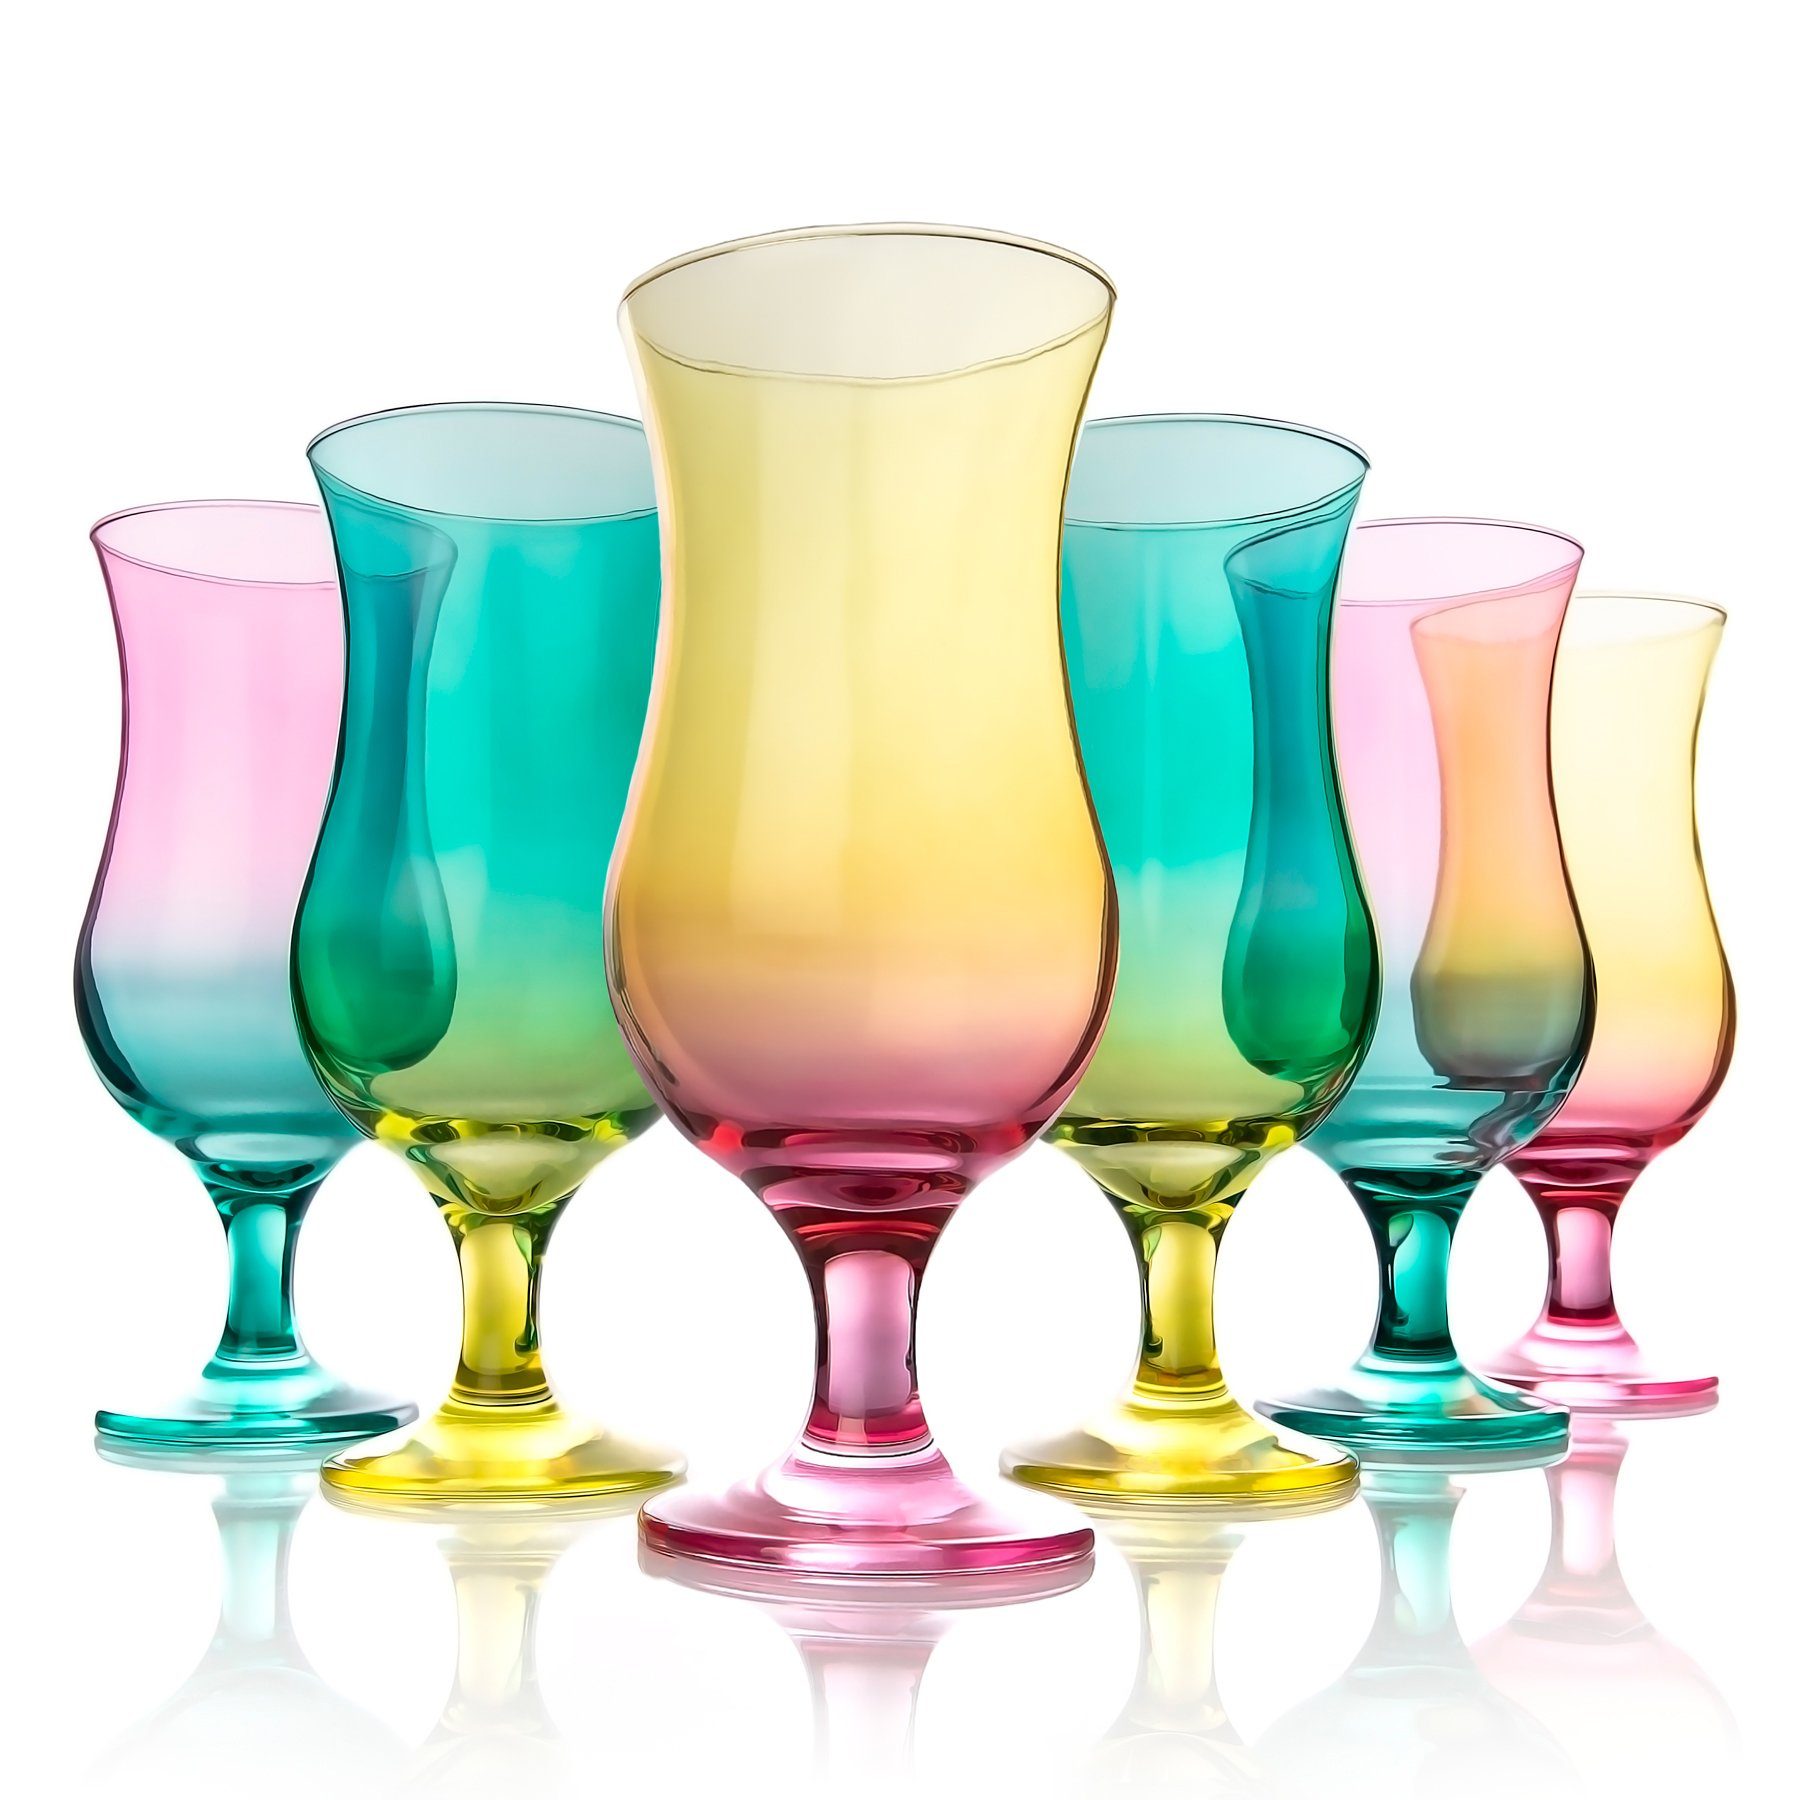 https://i.otto.de/i/otto/5e5b5e93-7c83-5169-a6a1-6677d6e5d302/bigdean-cocktailglas-6-stueck-bunte-cocktailglaeser-420-ml-standfestes-glas.jpg?$formatz$